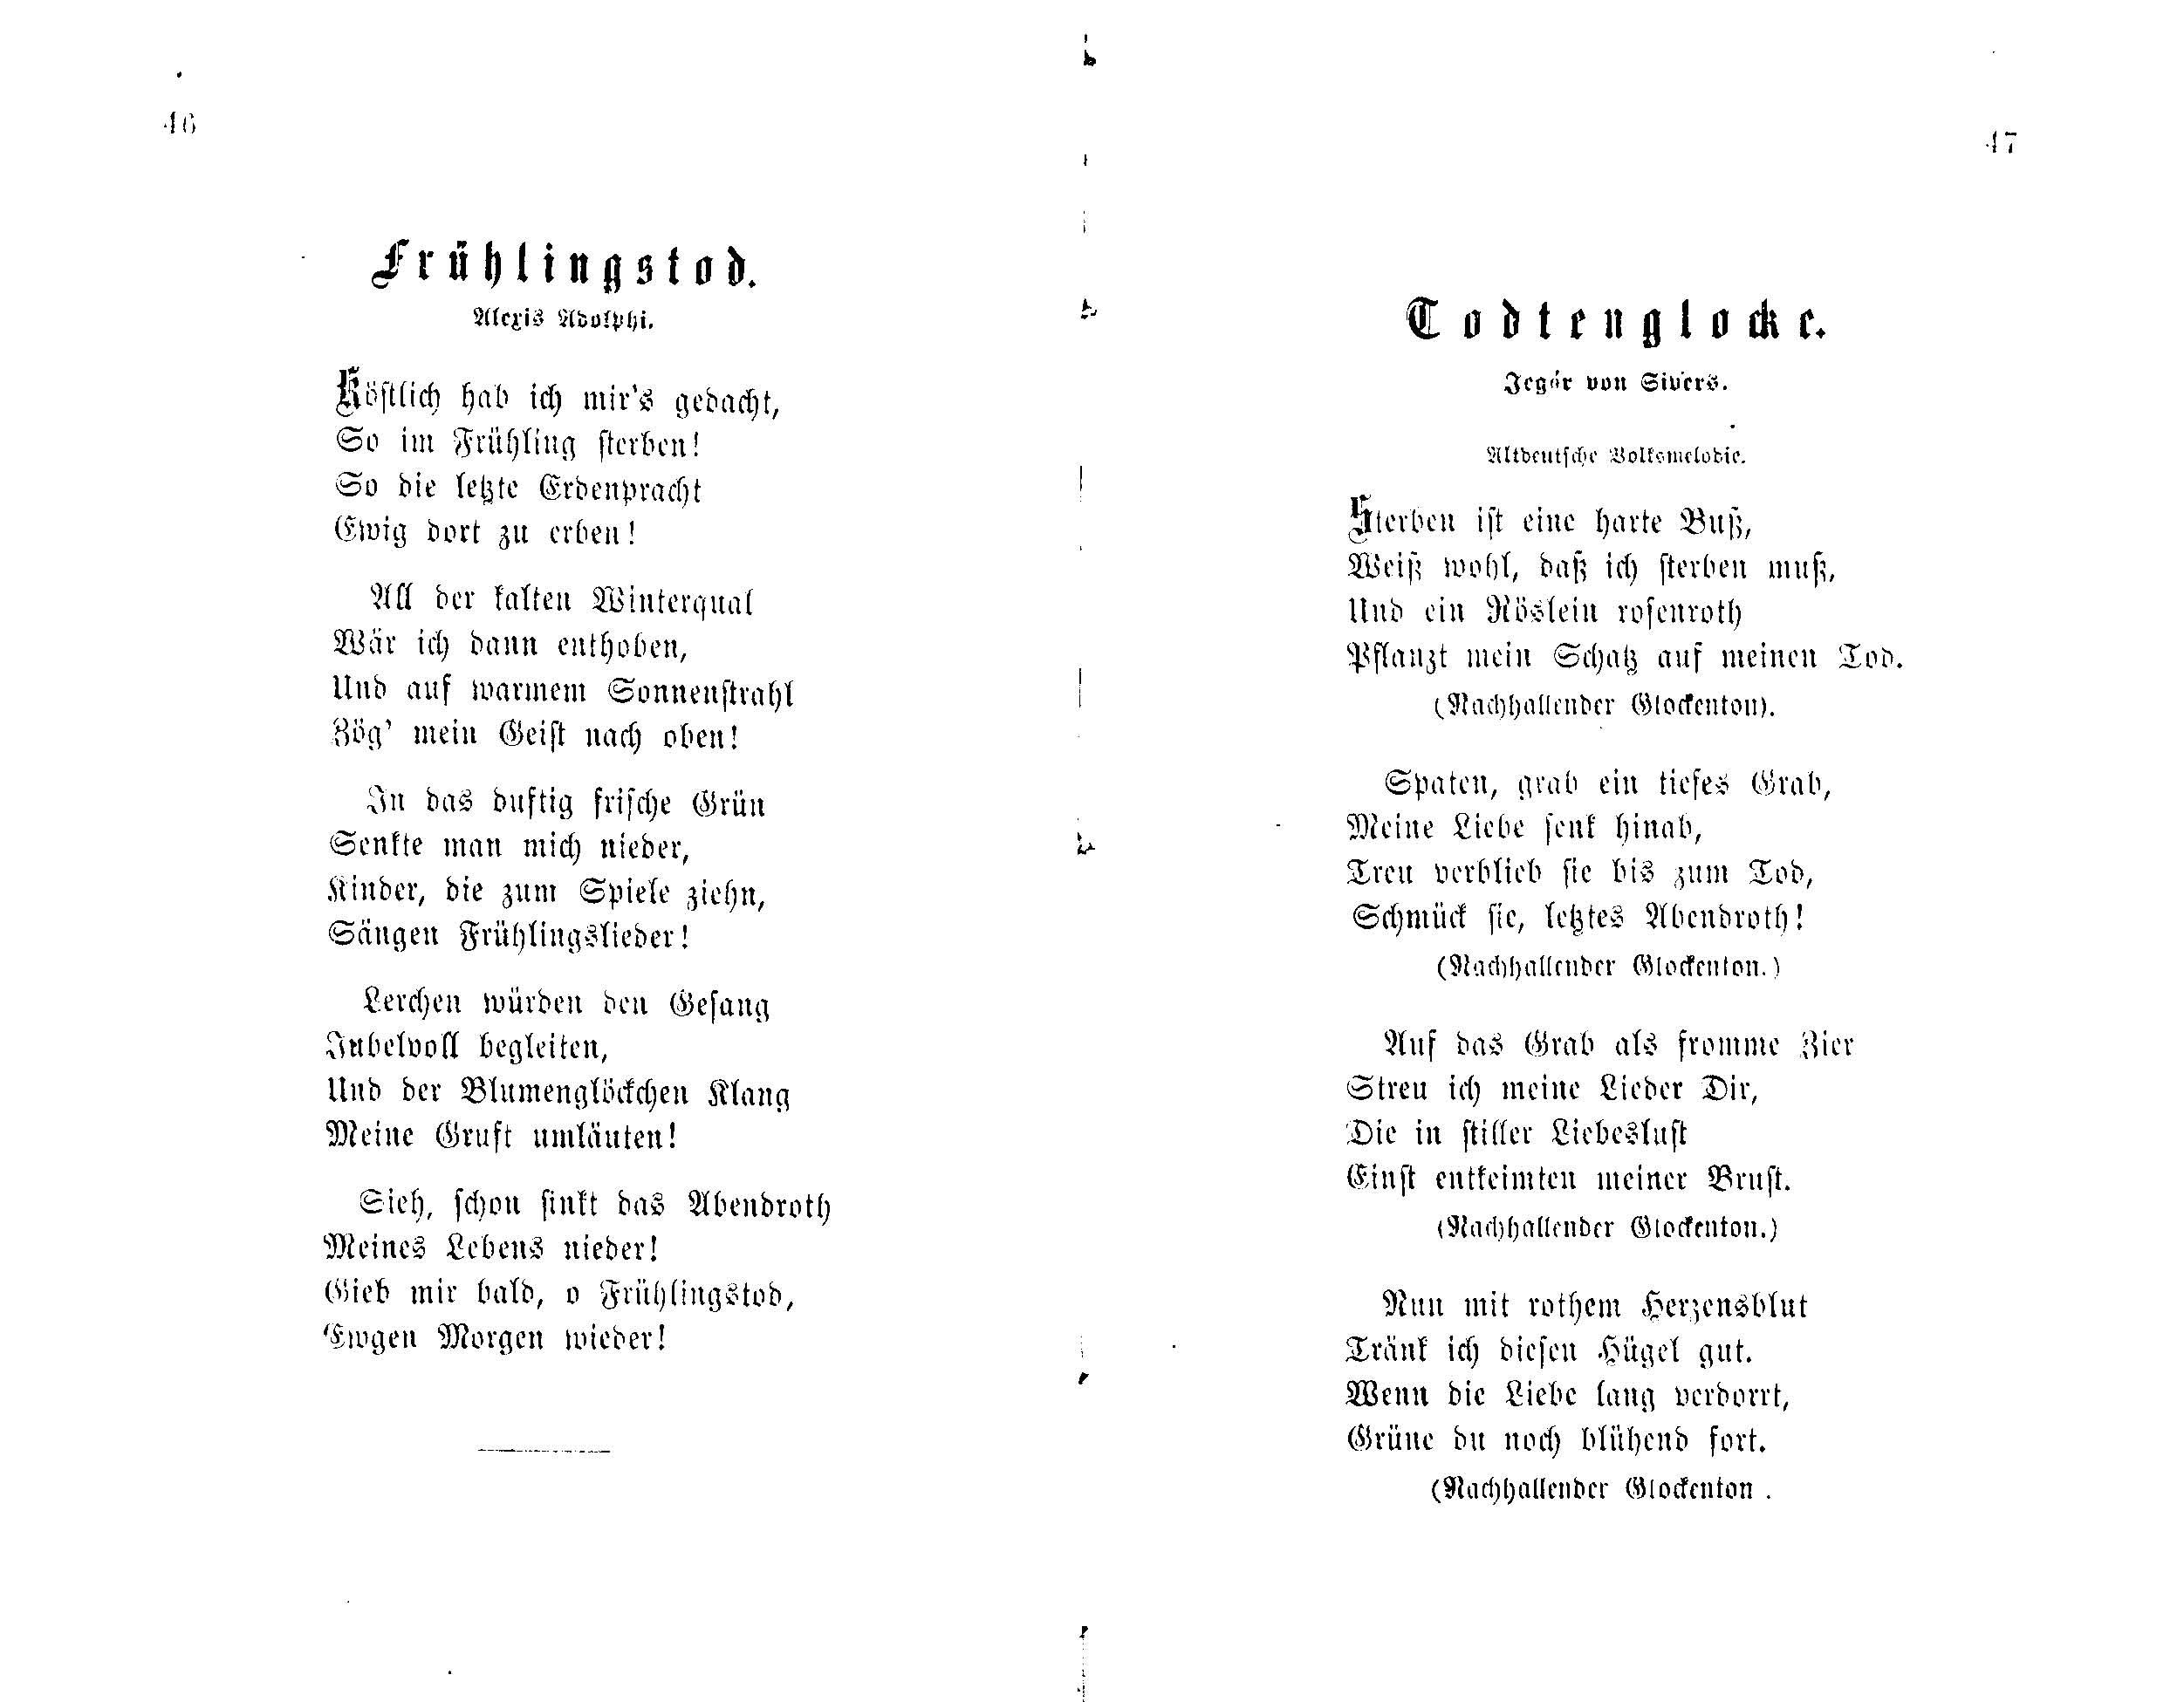 Todtenglocke (1877) | 1. (46-47) Main body of text